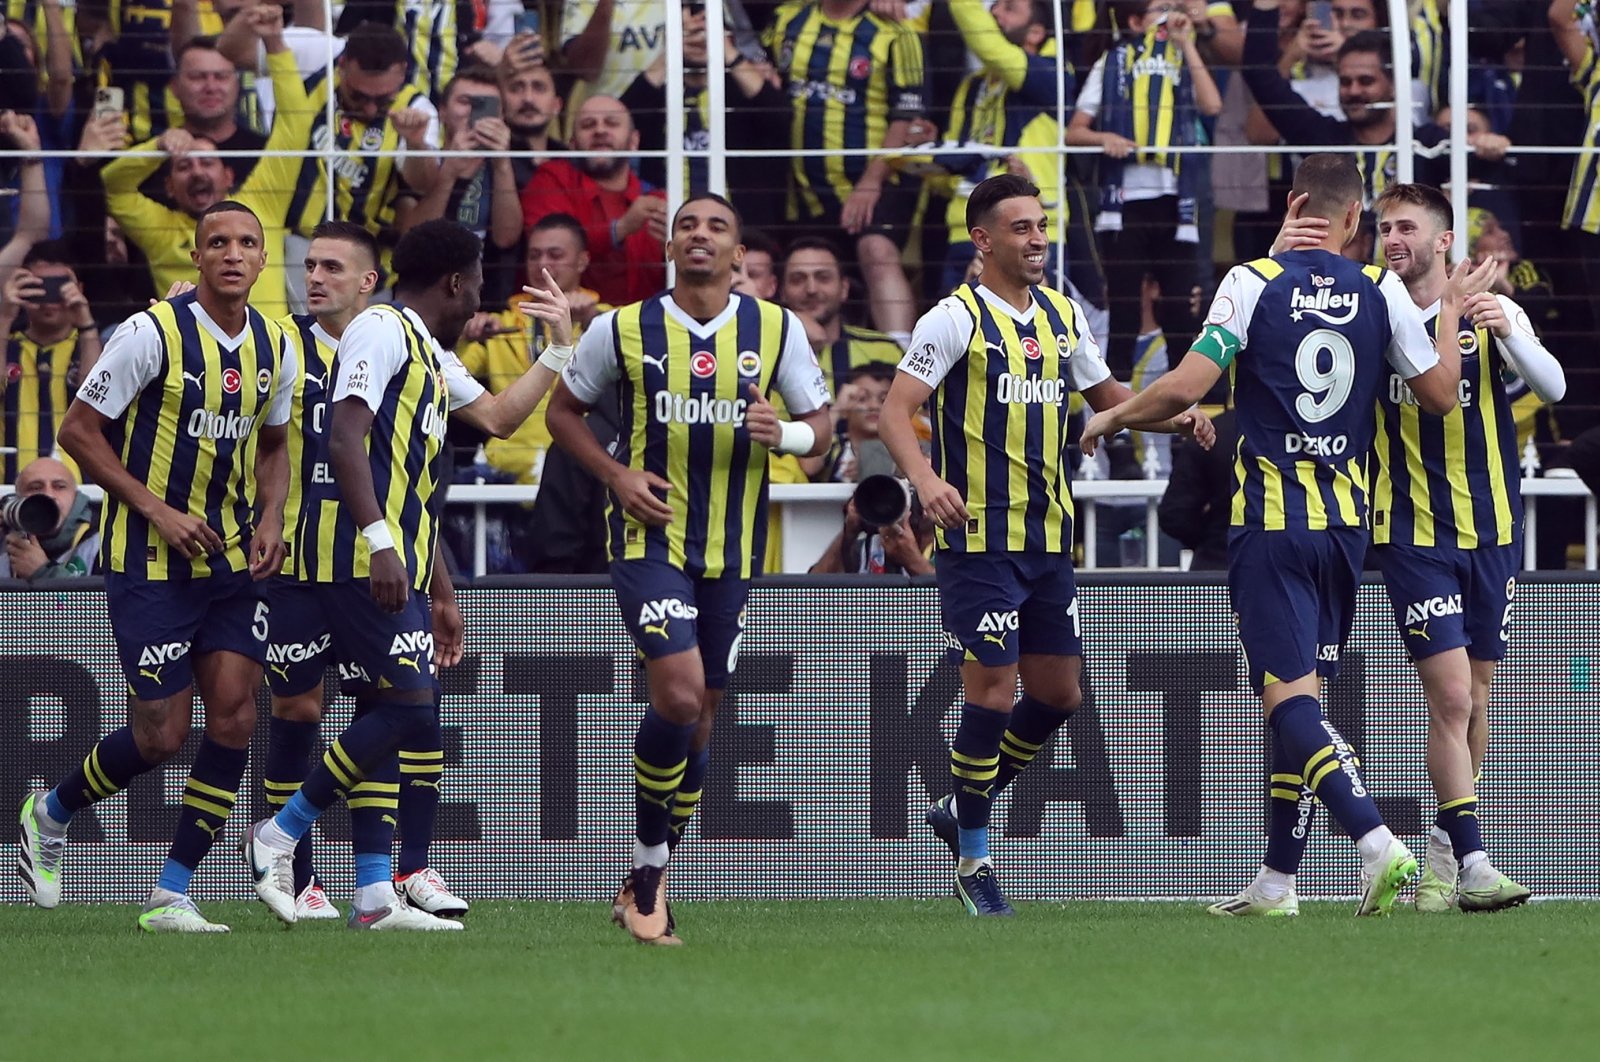 Fenerbahçe players celebrate after a goal during the match against Rizespor, Istanbul, Türkiye, Oct. 1, 2023. (IHA Photo)